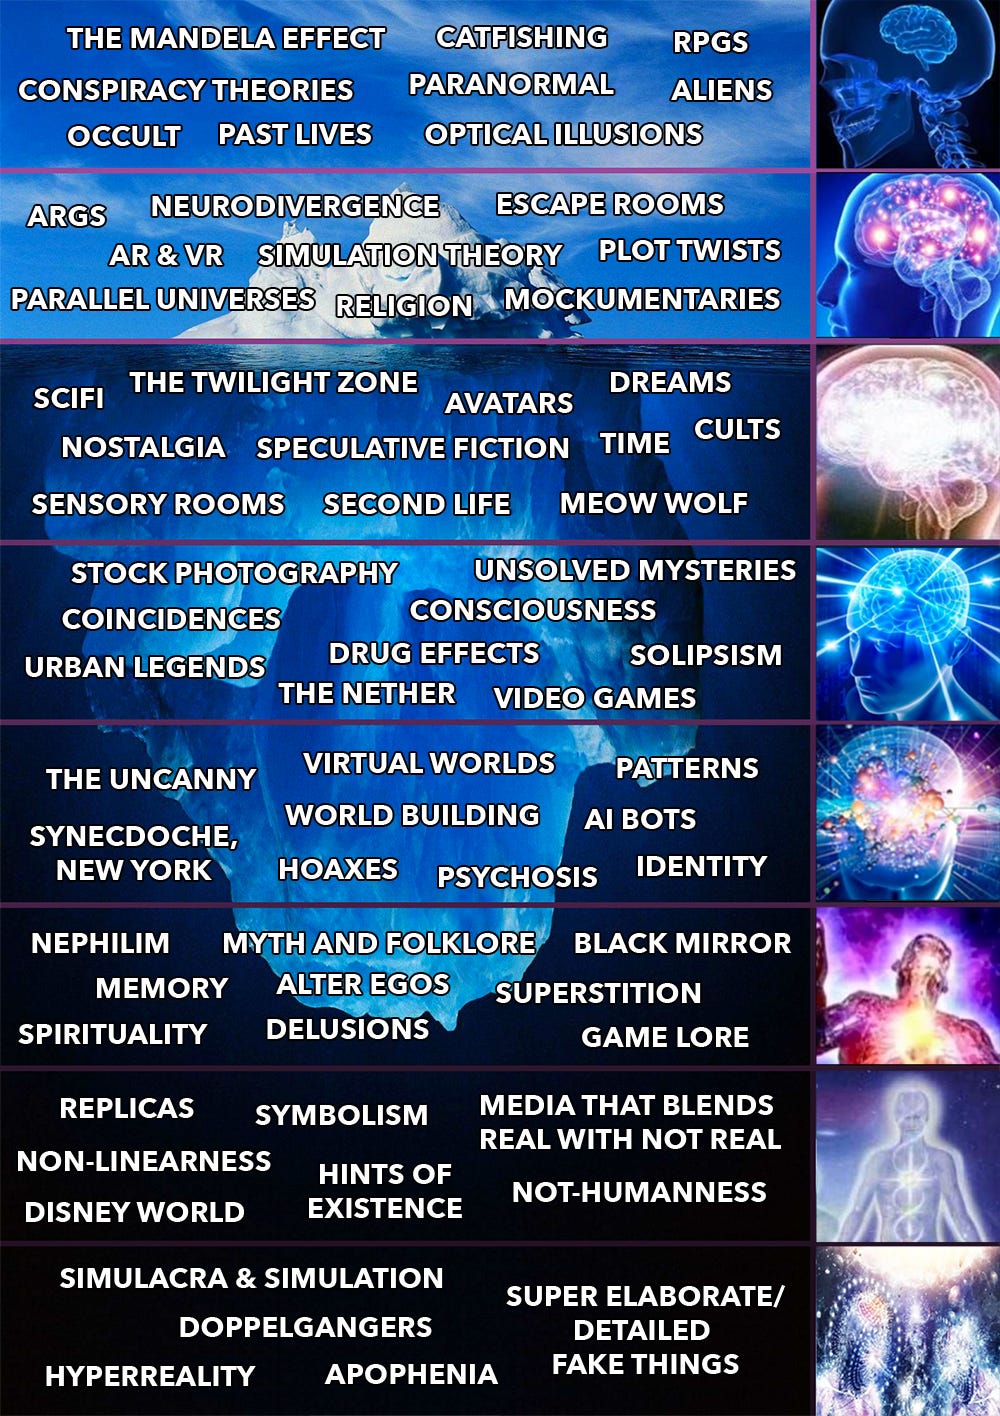 Iceberg meme featuring a list of topics under the unreality umbrella